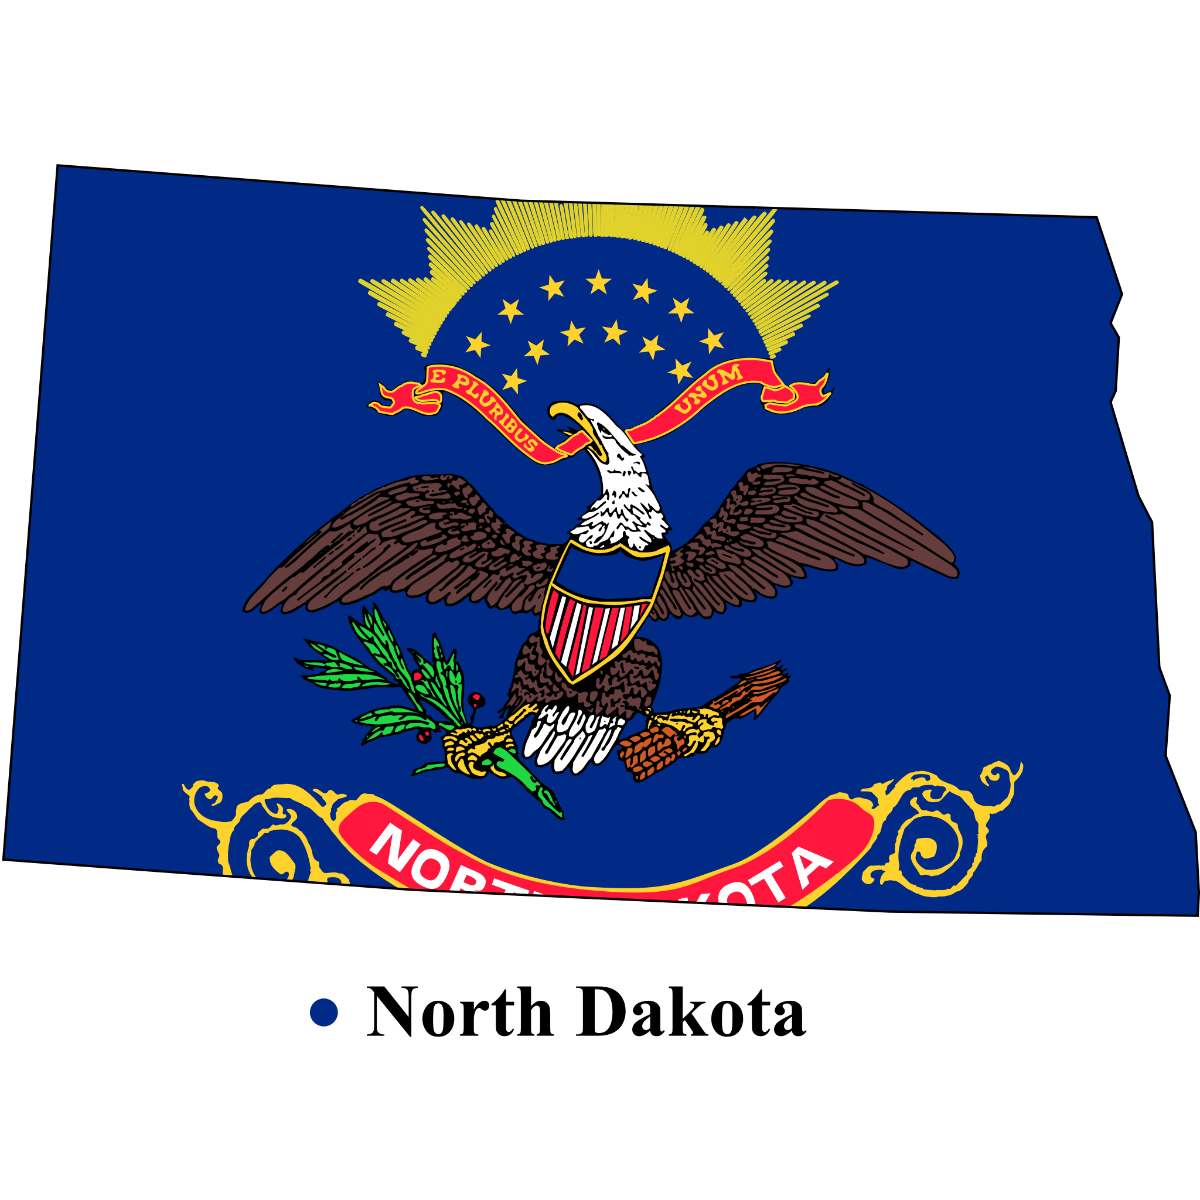 North Dakota State map cutout with North Dakota flag superimposed